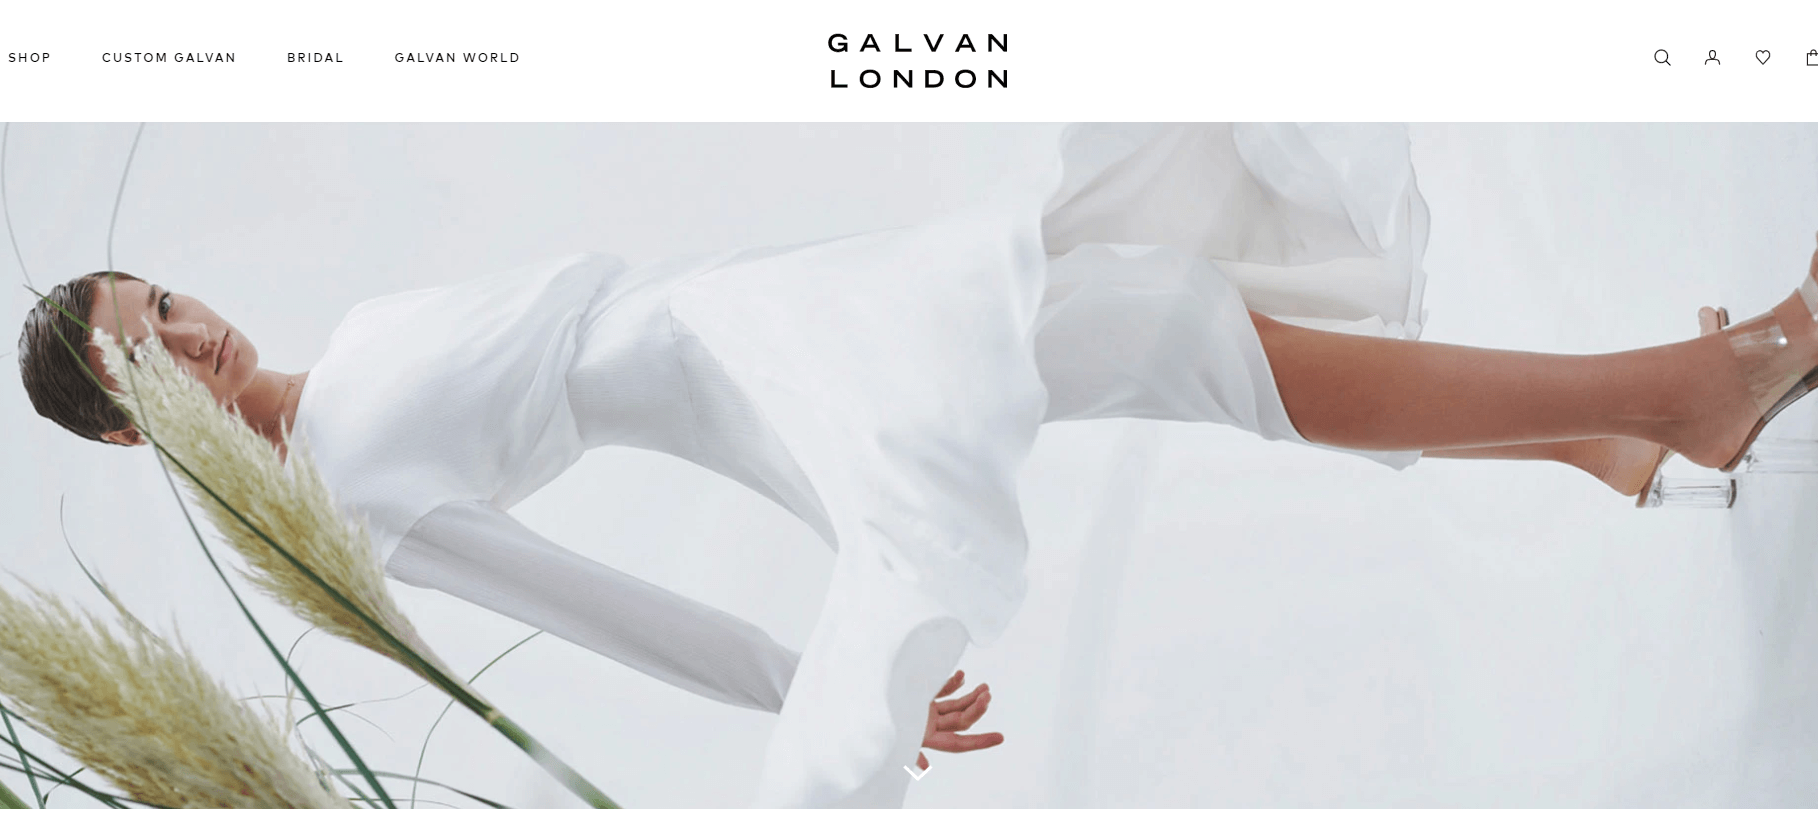 Galvan官网-英伦新品牌 服装品牌Galvan London